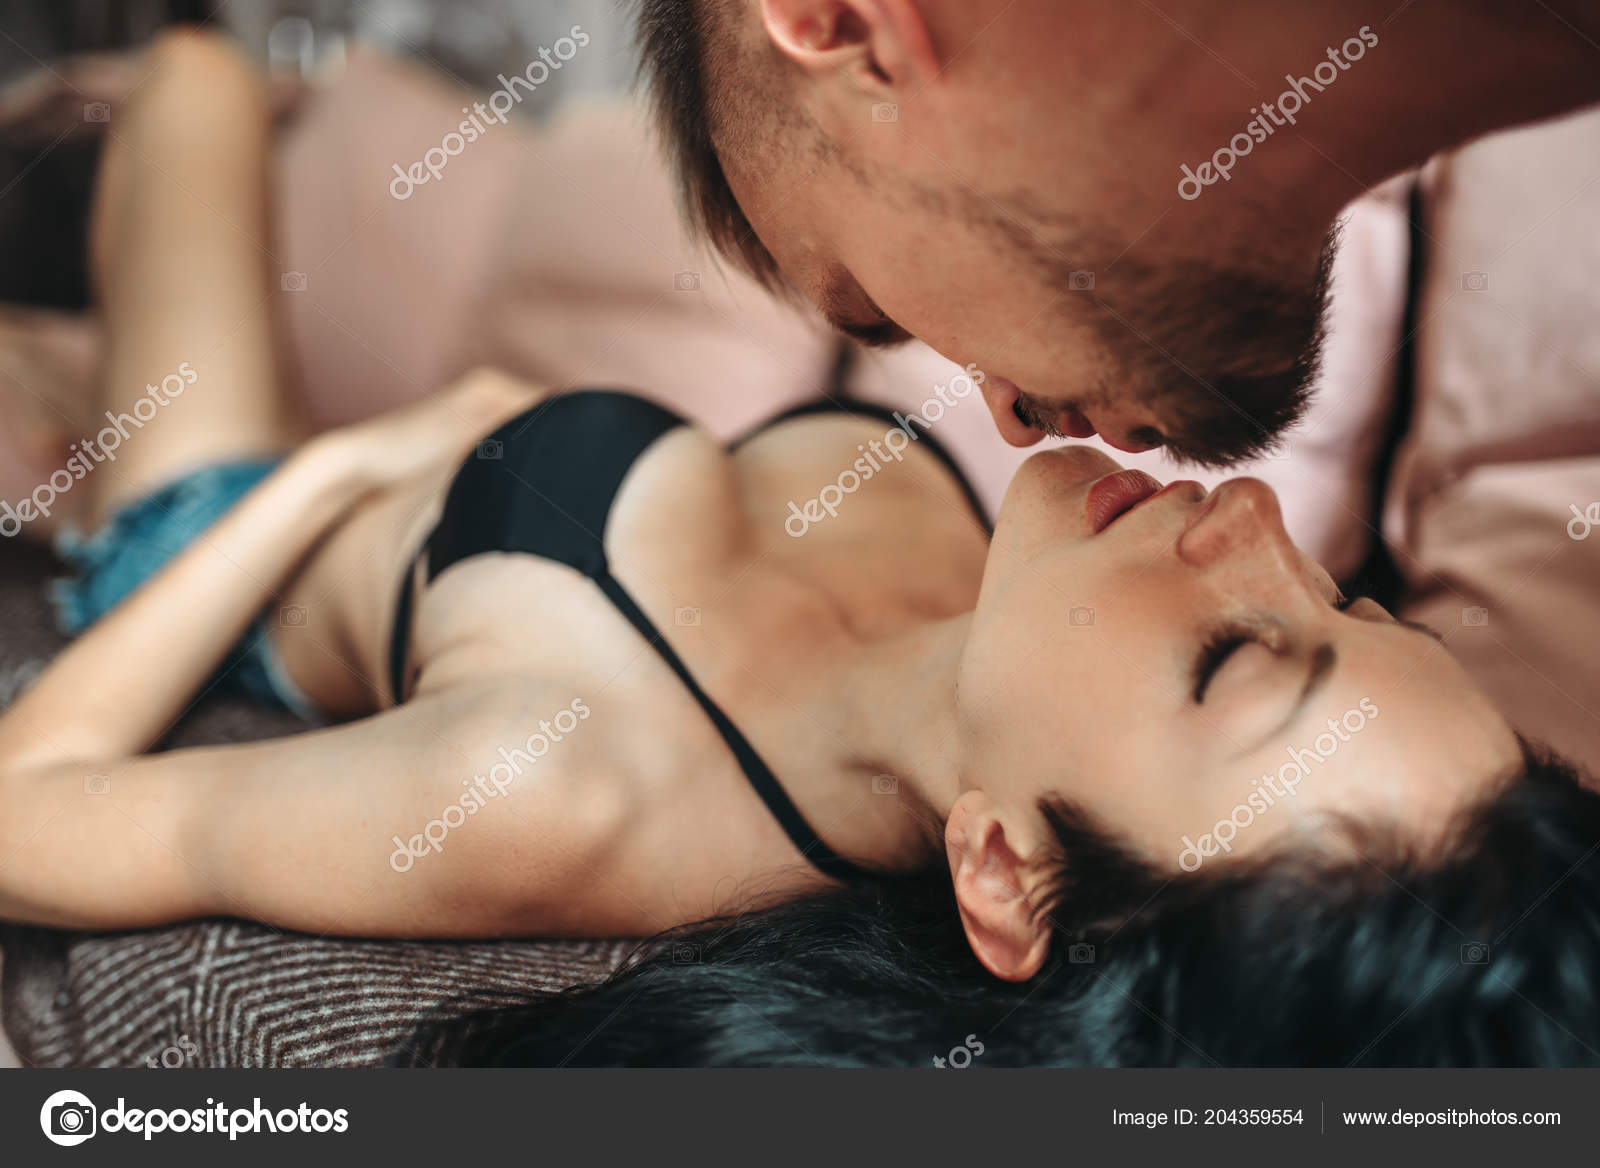 Erotic foto bed sexy in Hd teen